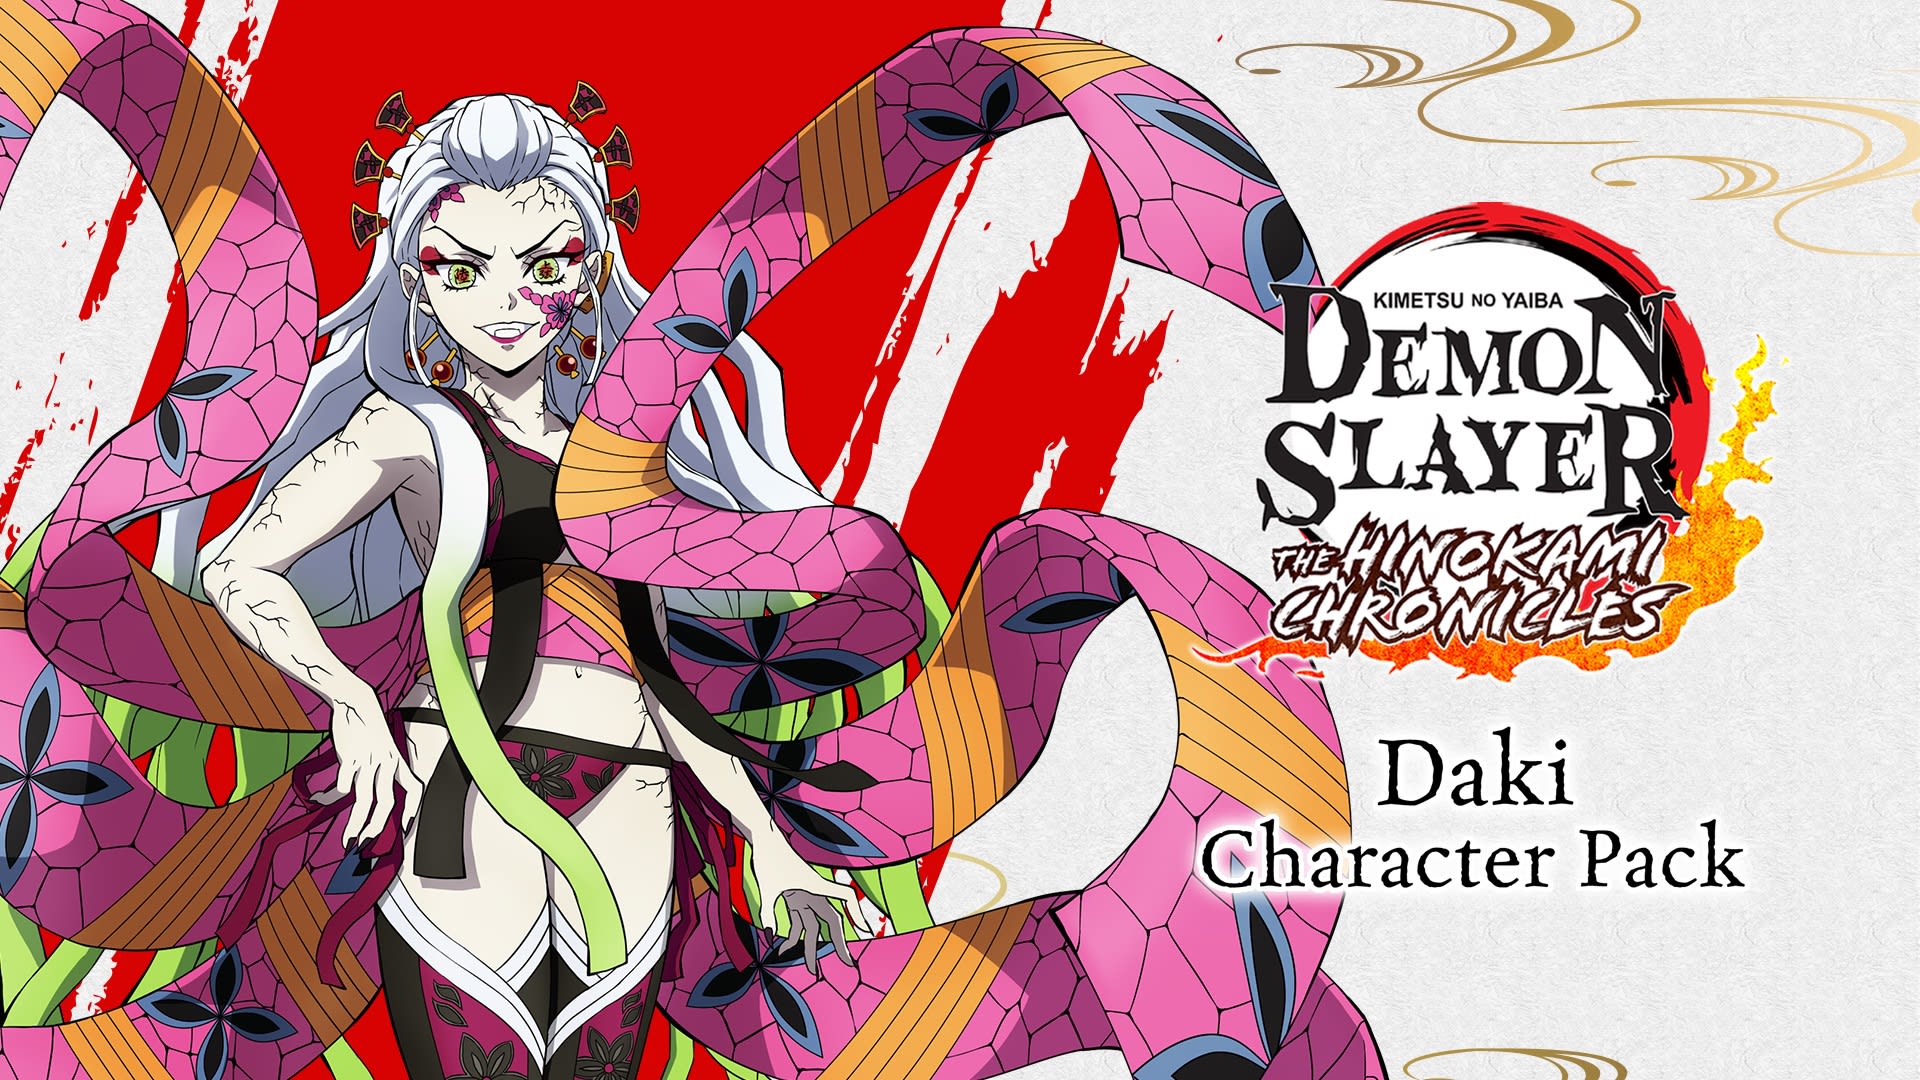 Daki Character Pack